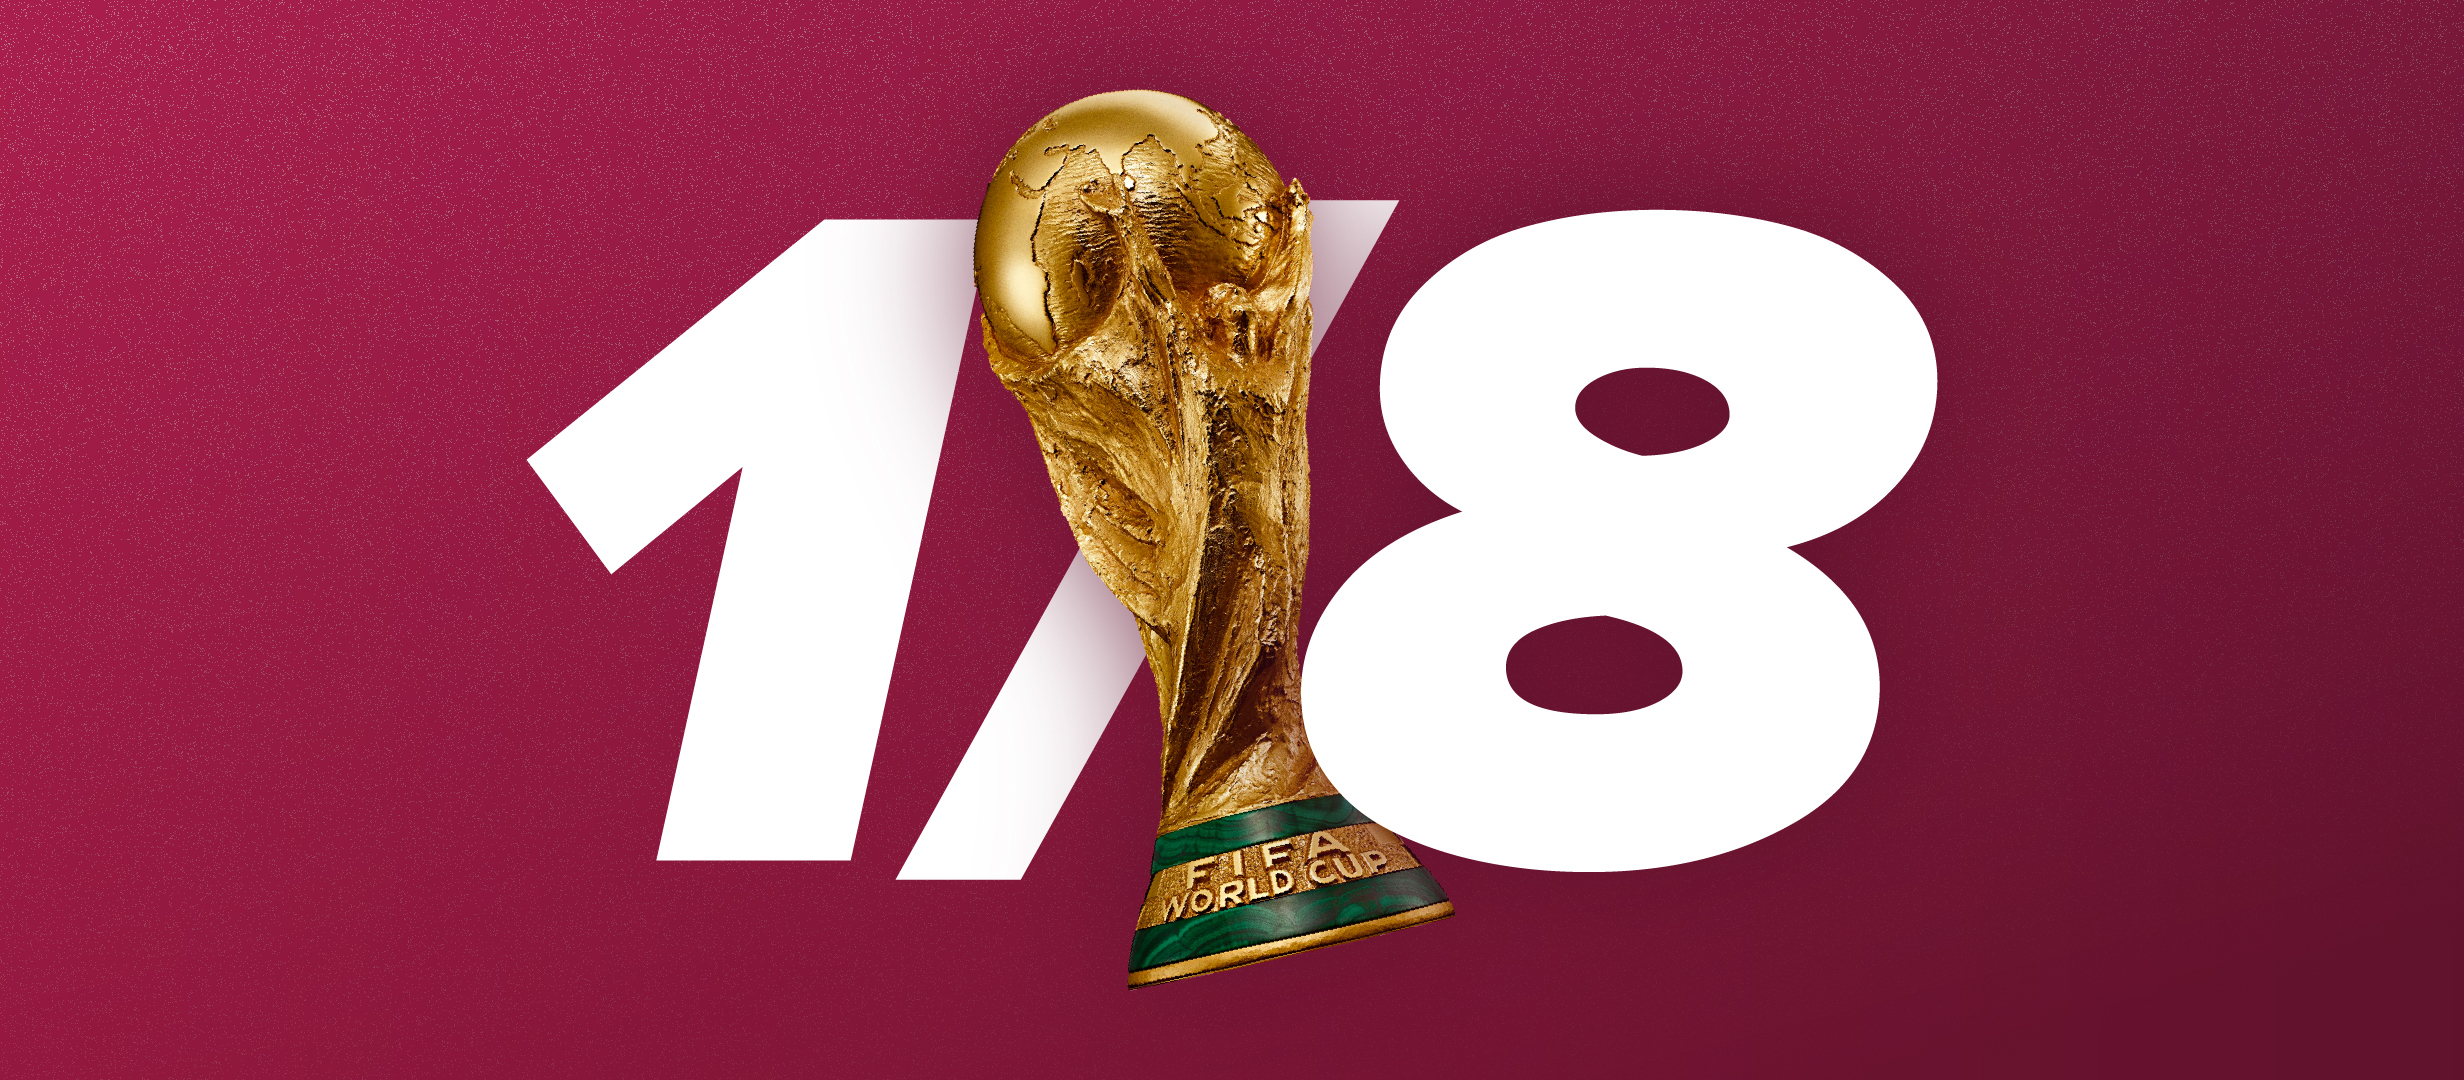 Прогноз плей-офф ЧМ 2022: прогнозы на 1/8 финала чемпионата мира по футболу 2022